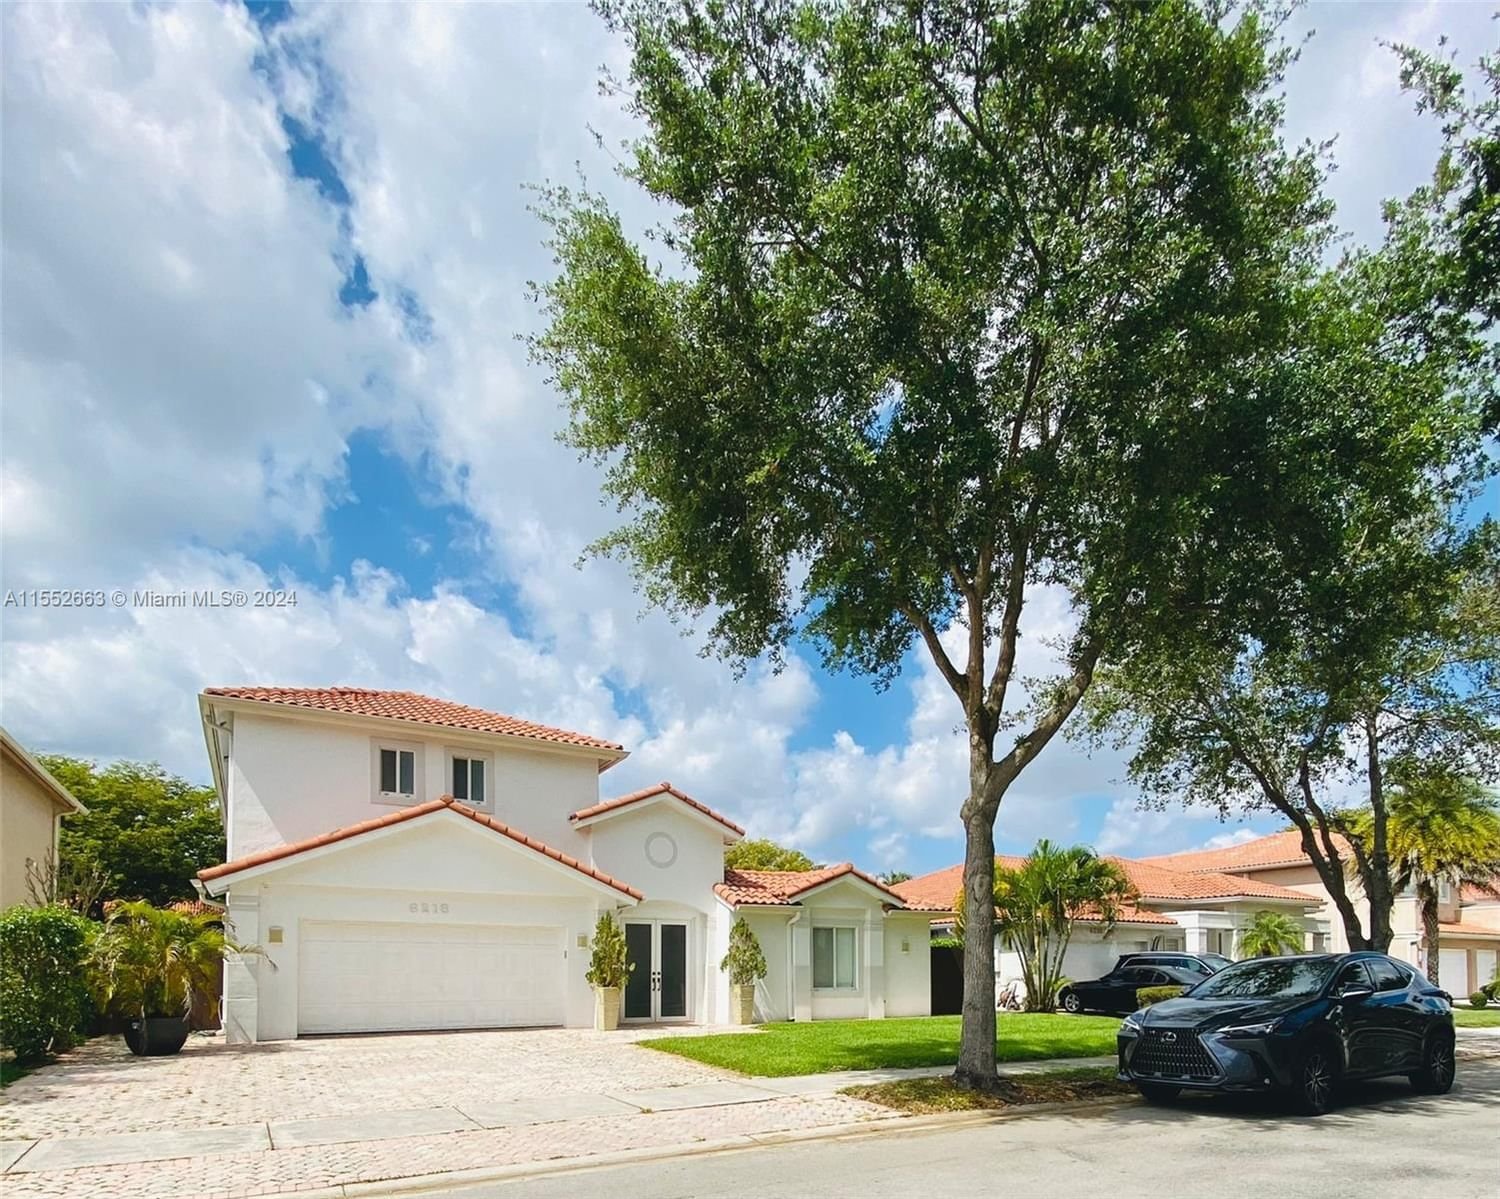 Real estate property located at 6218 113th Pl, Miami-Dade County, DORAL ISLES RIVIERA, Doral, FL